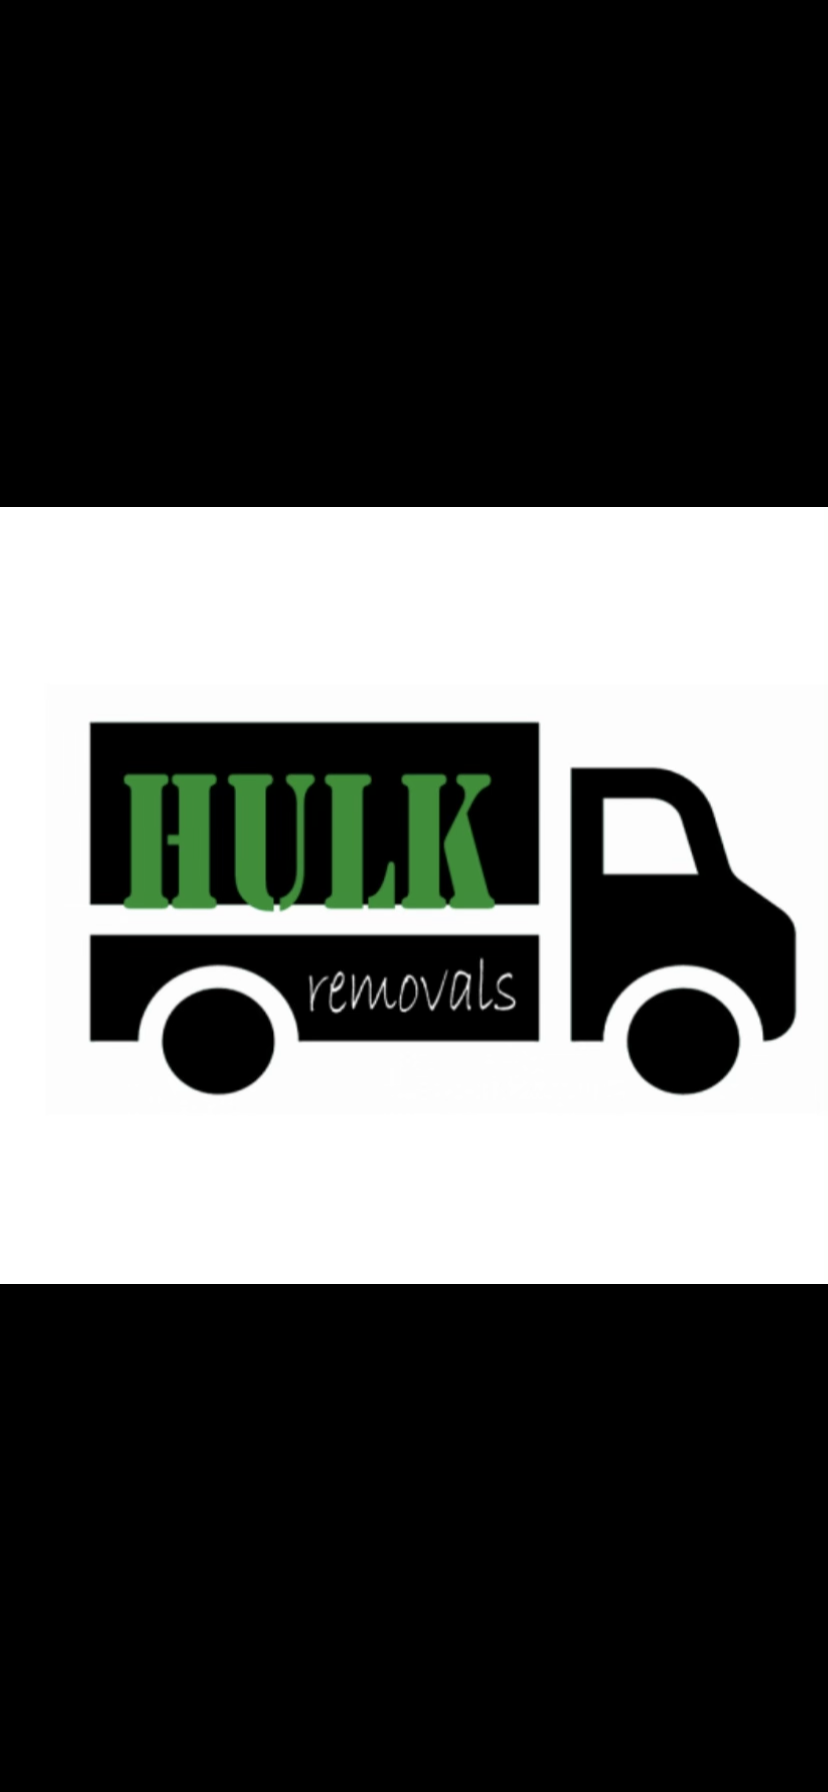 Hulk Removals ltd -logo